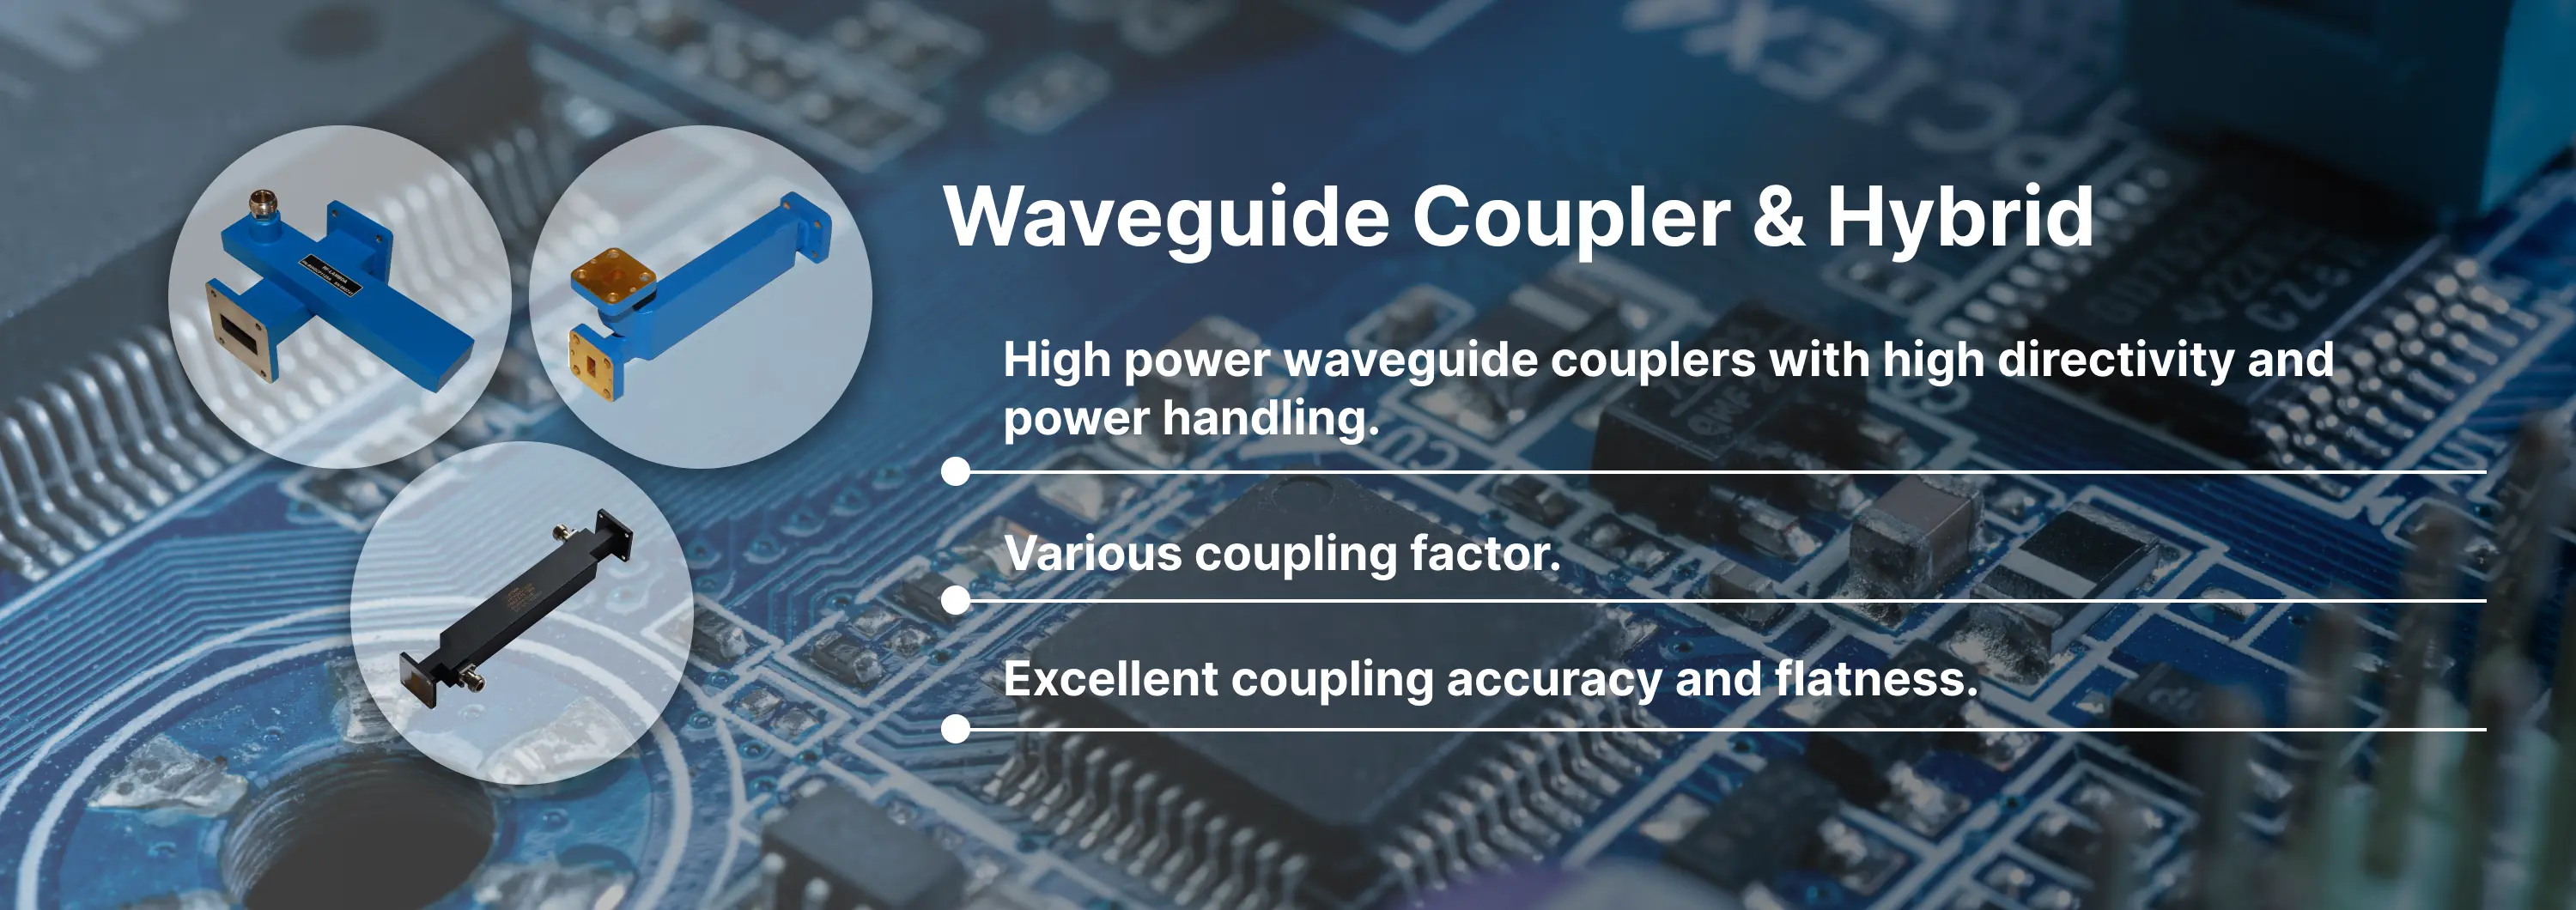 Waveguide Coupler & Hybrid Banner